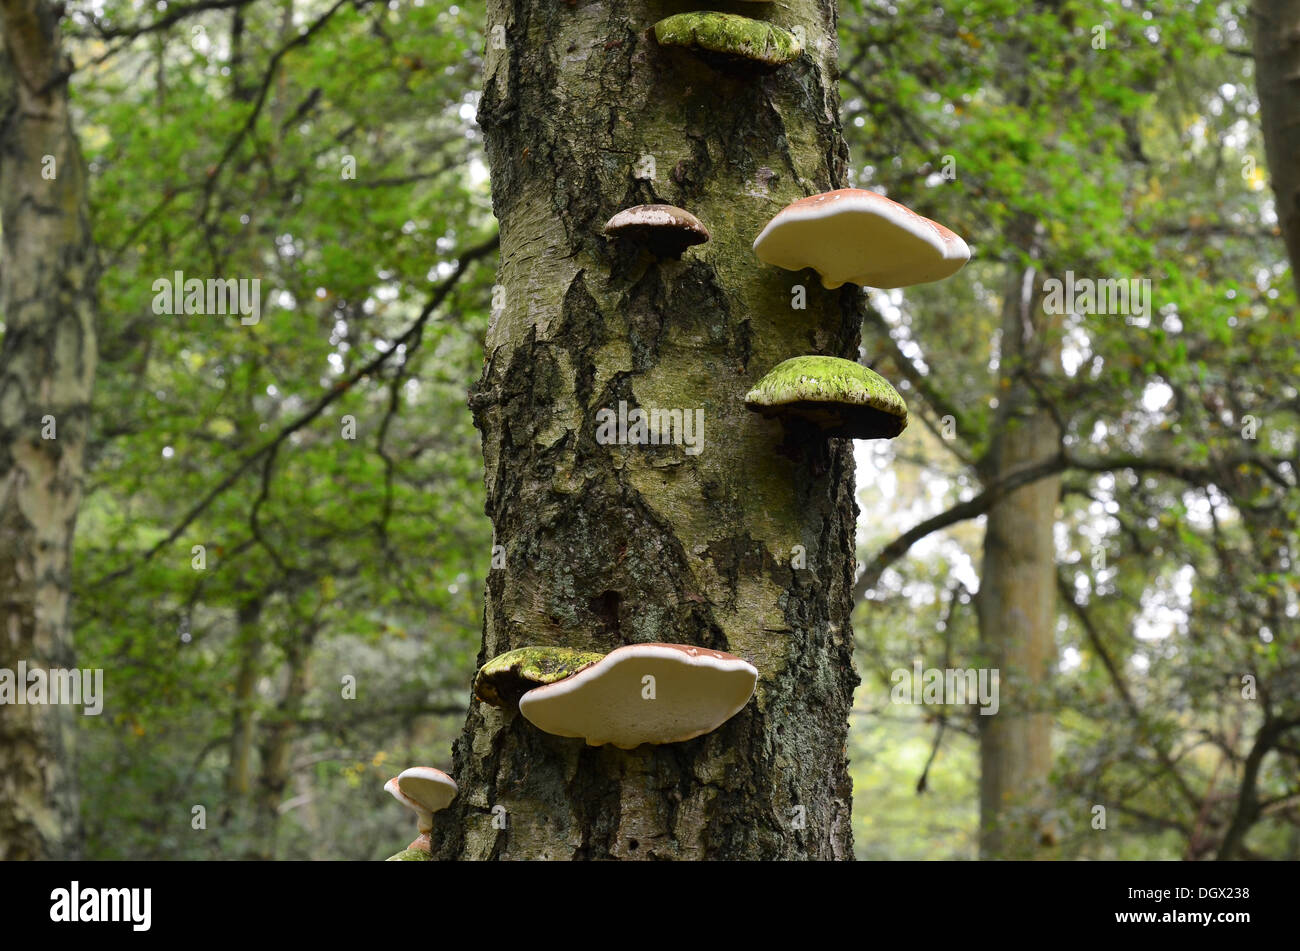 Bracket fungi growing on silver birch tree trunk Stock Photo